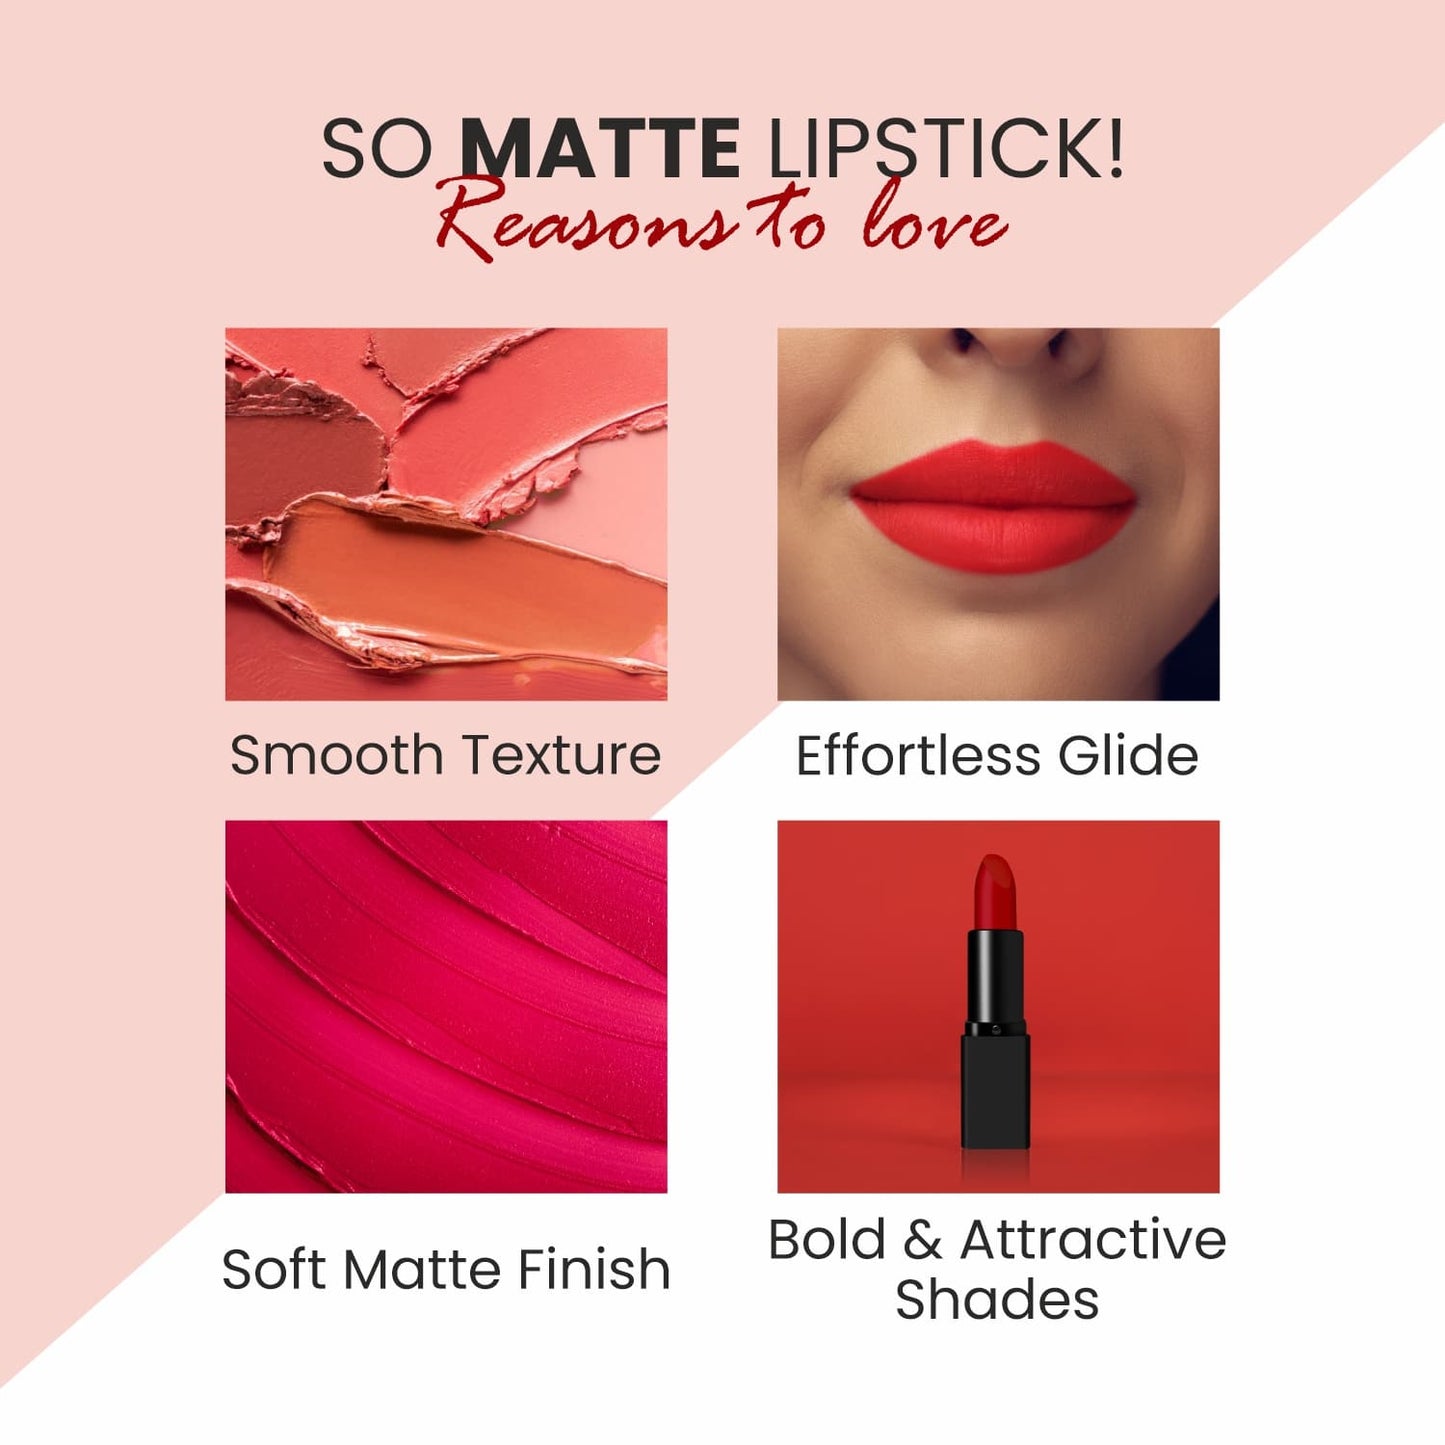 Wow Matte Lipstick - 24 Natural Beauty